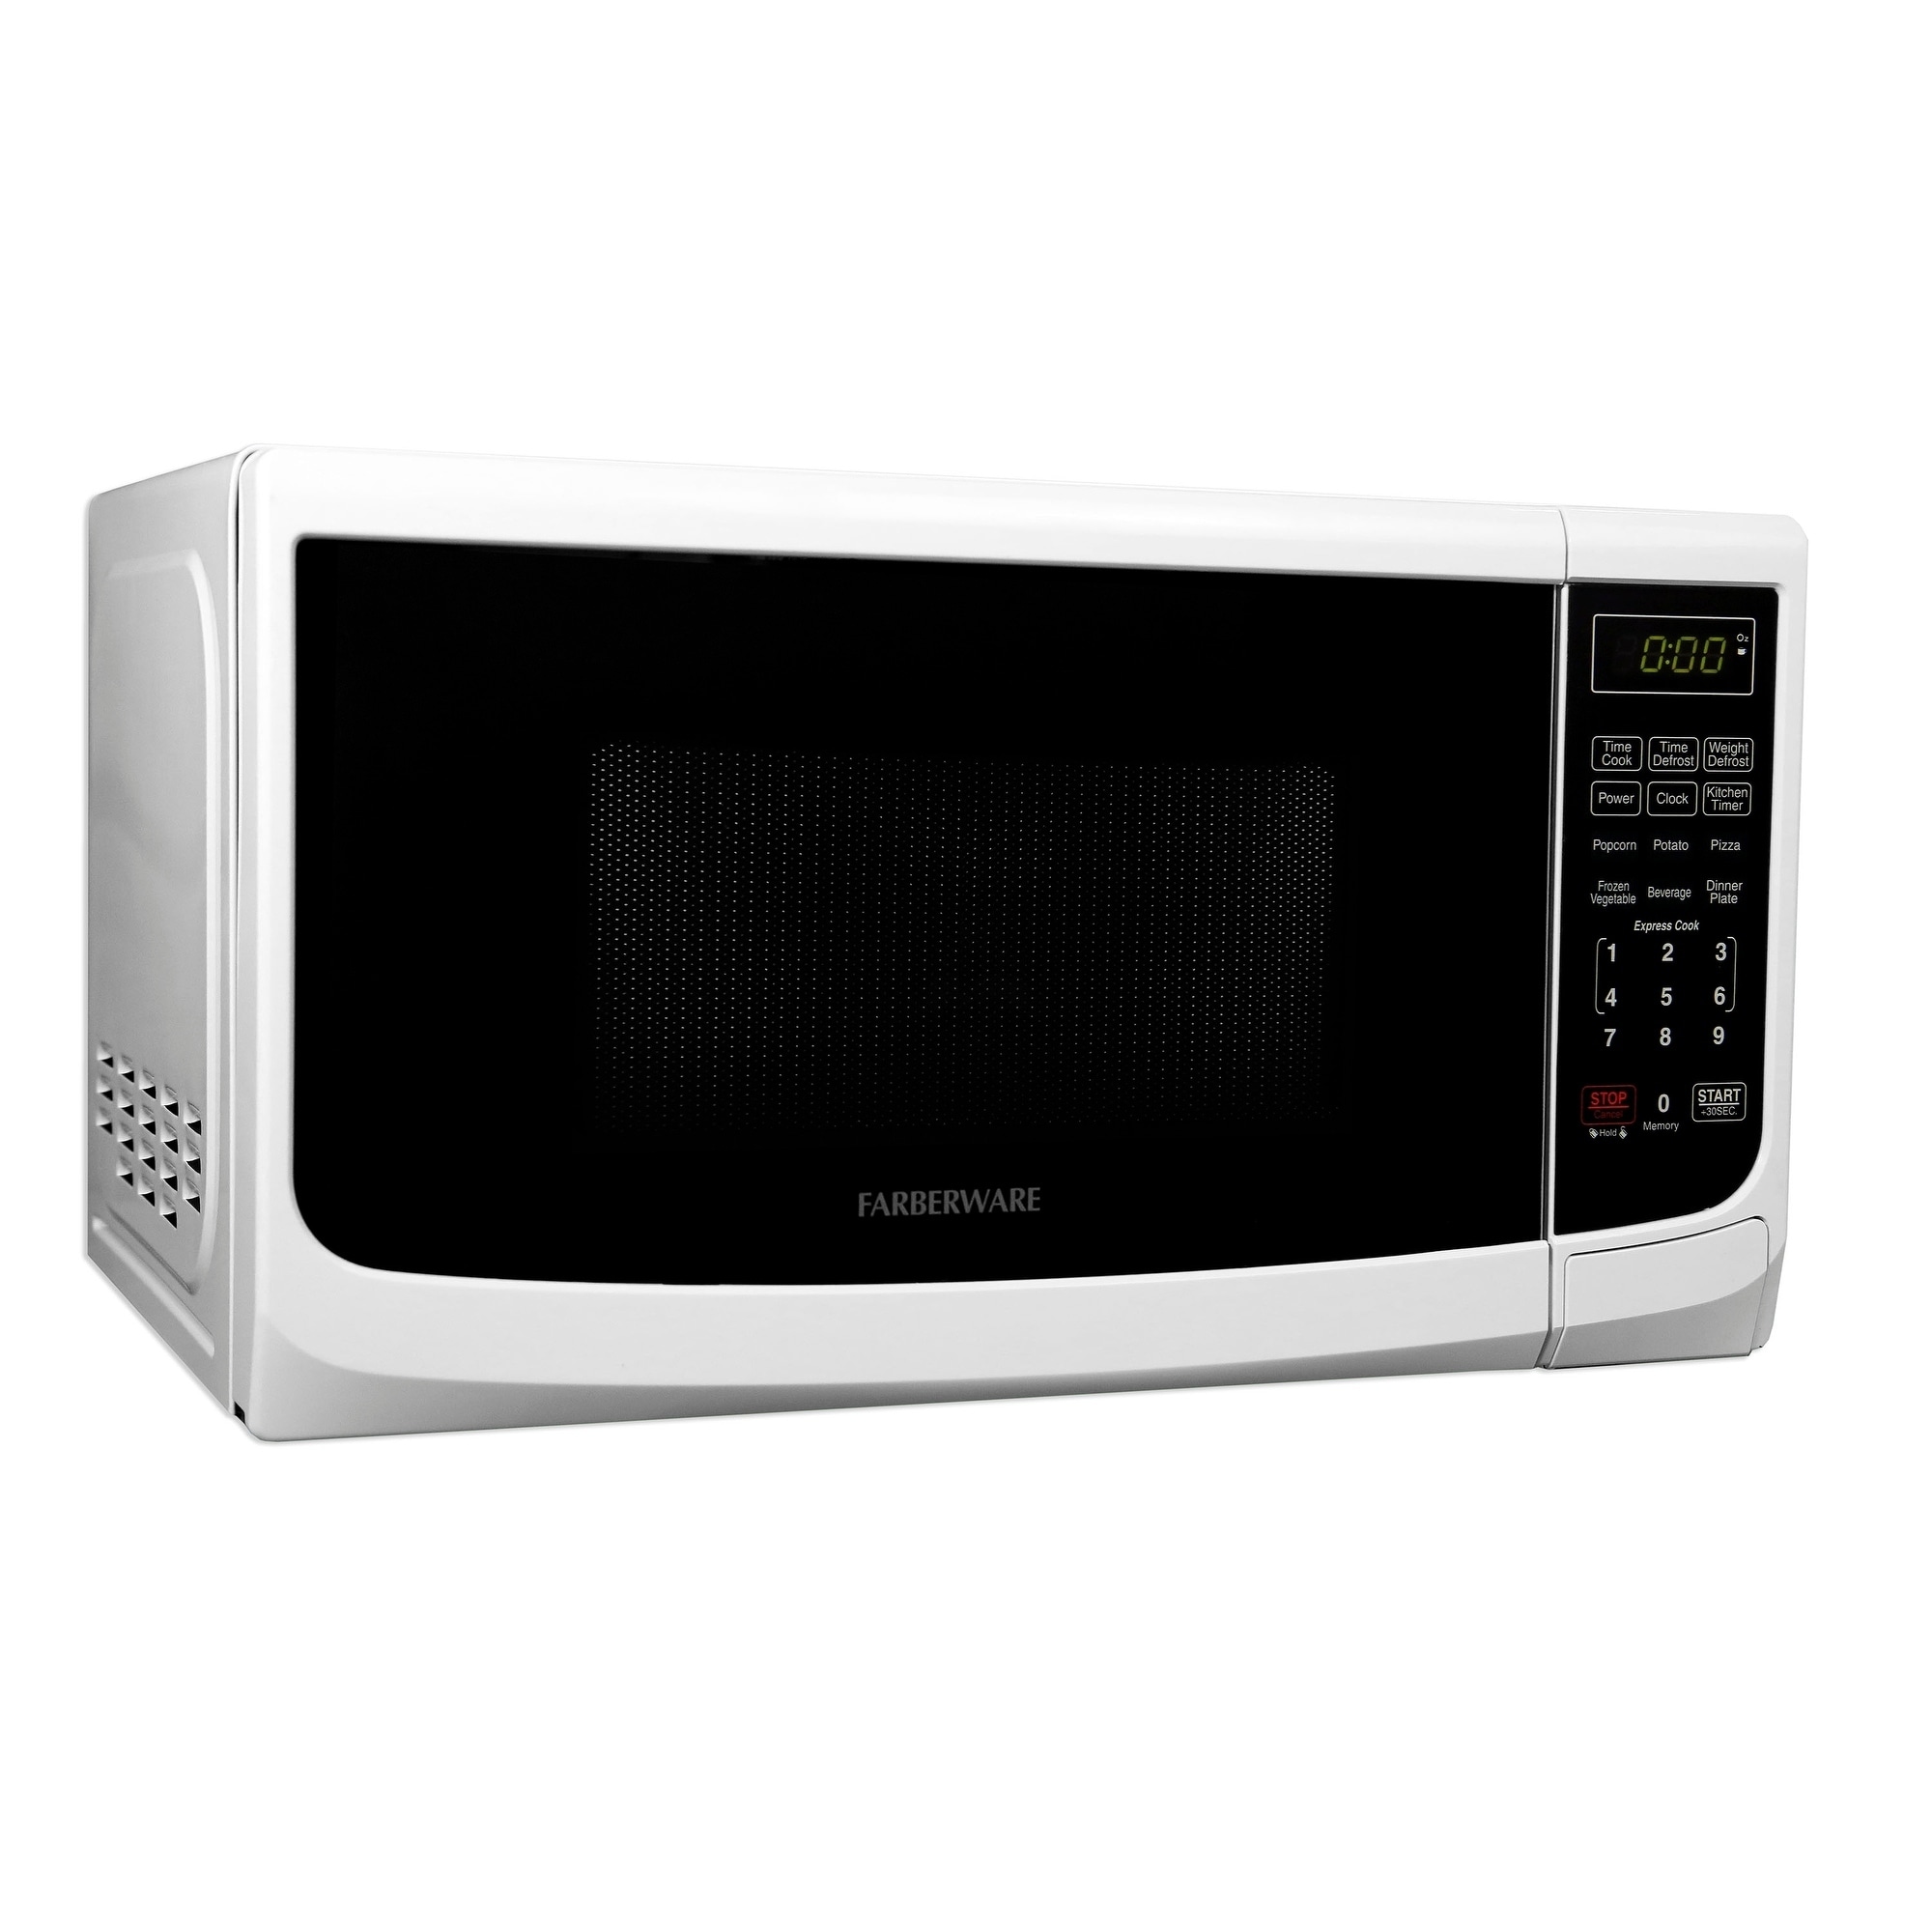 https://ak1.ostkcdn.com/images/products/29057137/Farberware-Classic-0.7-Cu.-Ft-700-Watt-Microwave-Oven-ca498c6a-42f6-4c21-90ef-8cf4917607b1.jpg